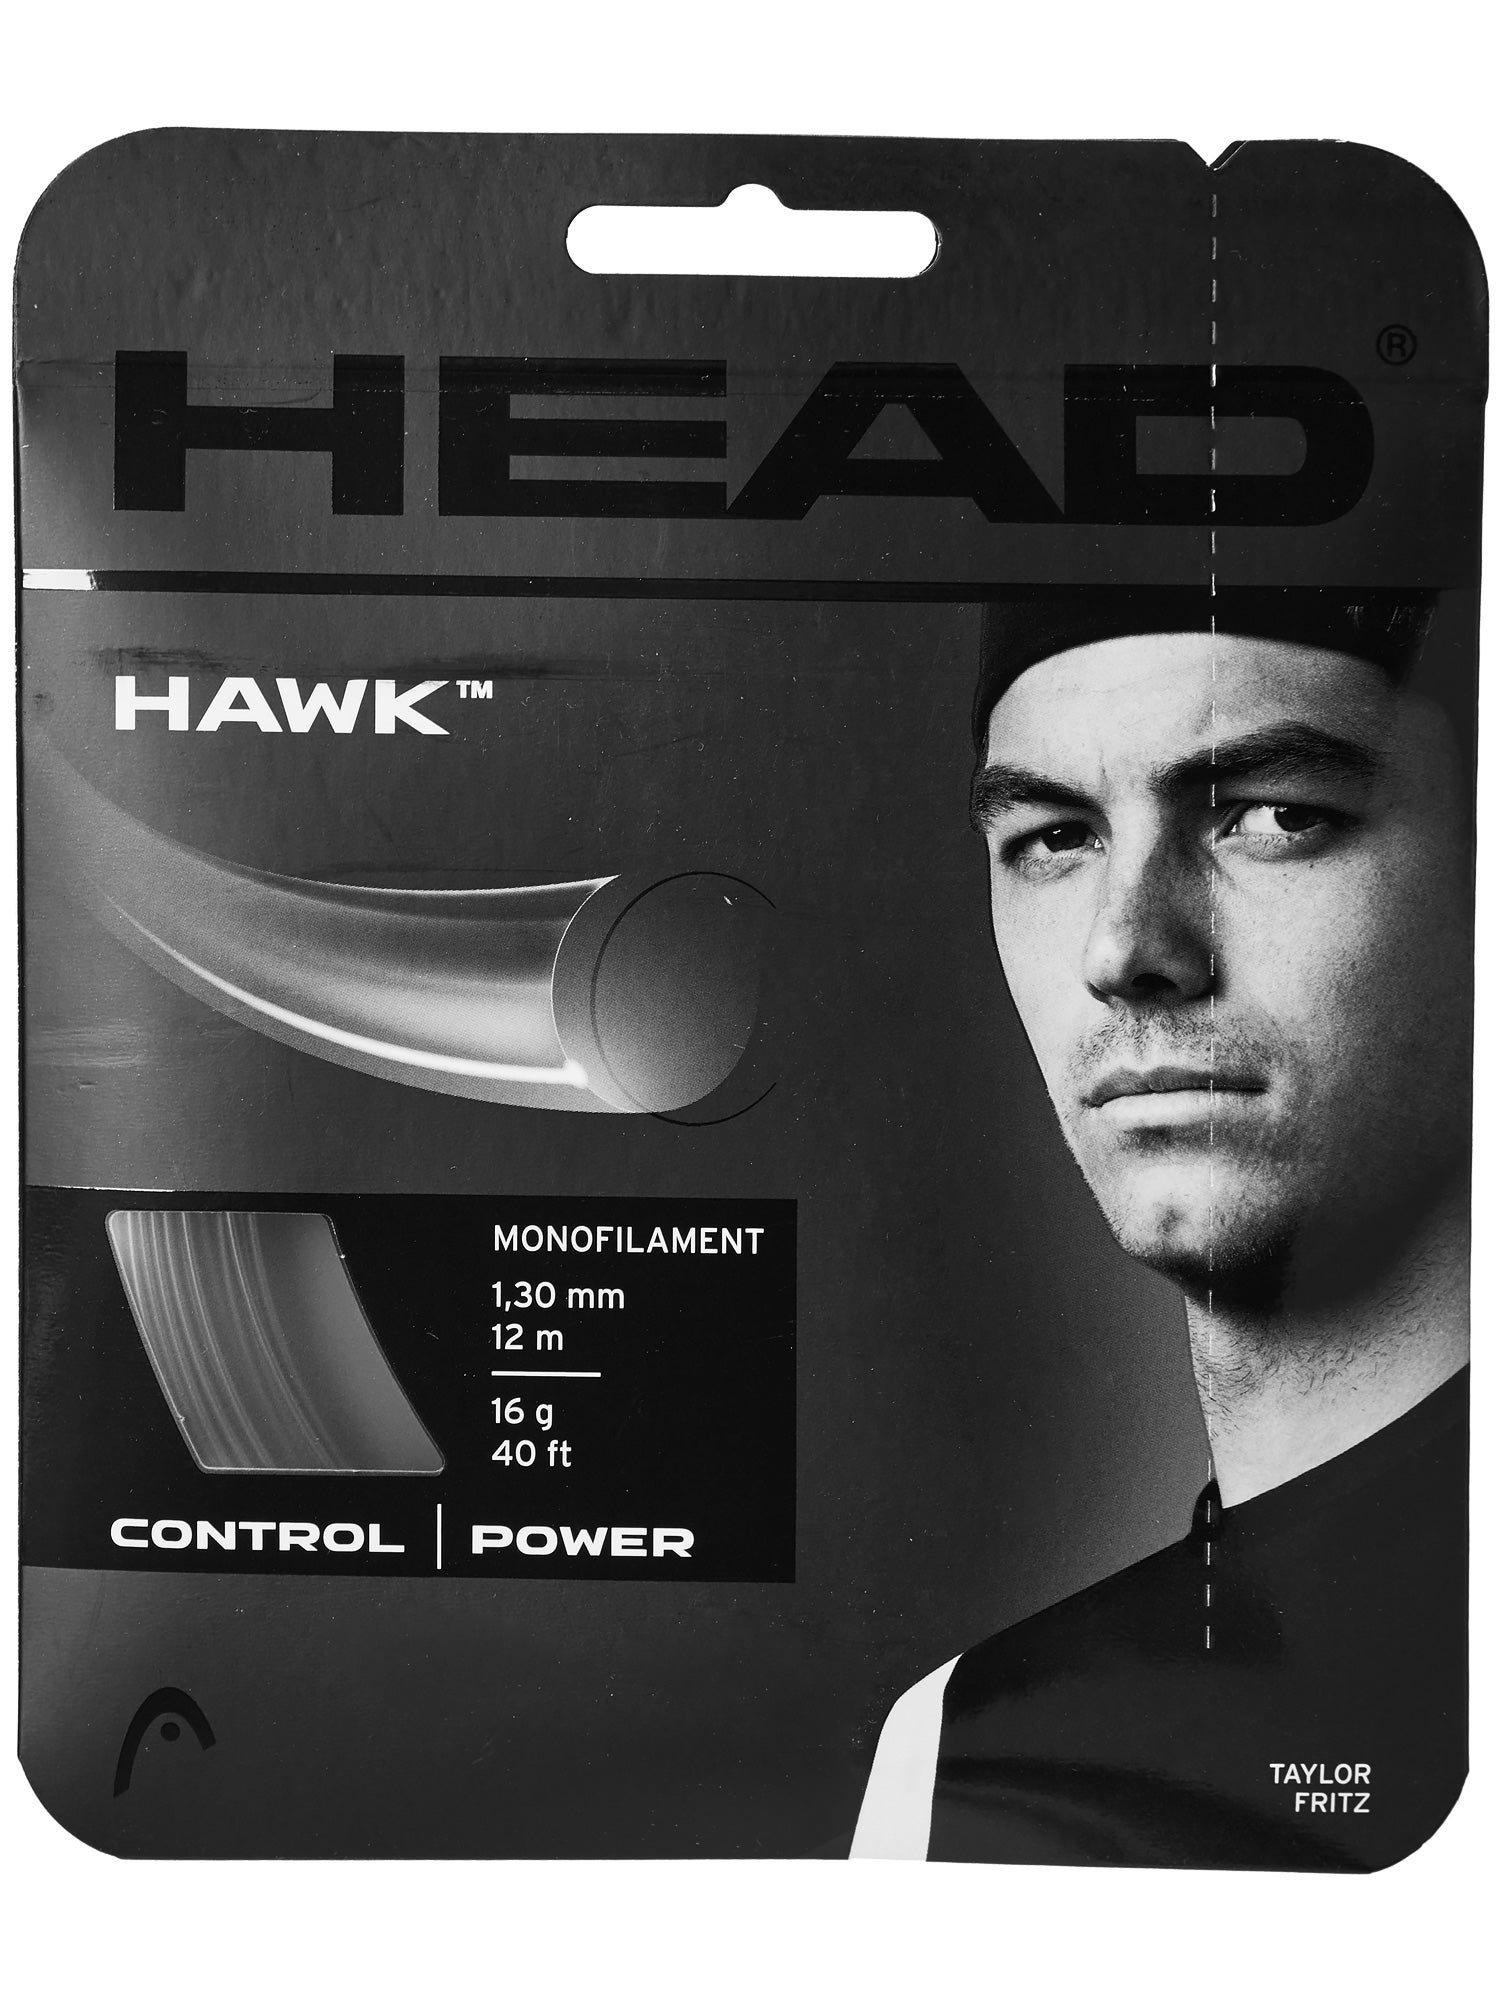 HEAD Hawk Set inkl Bespannung